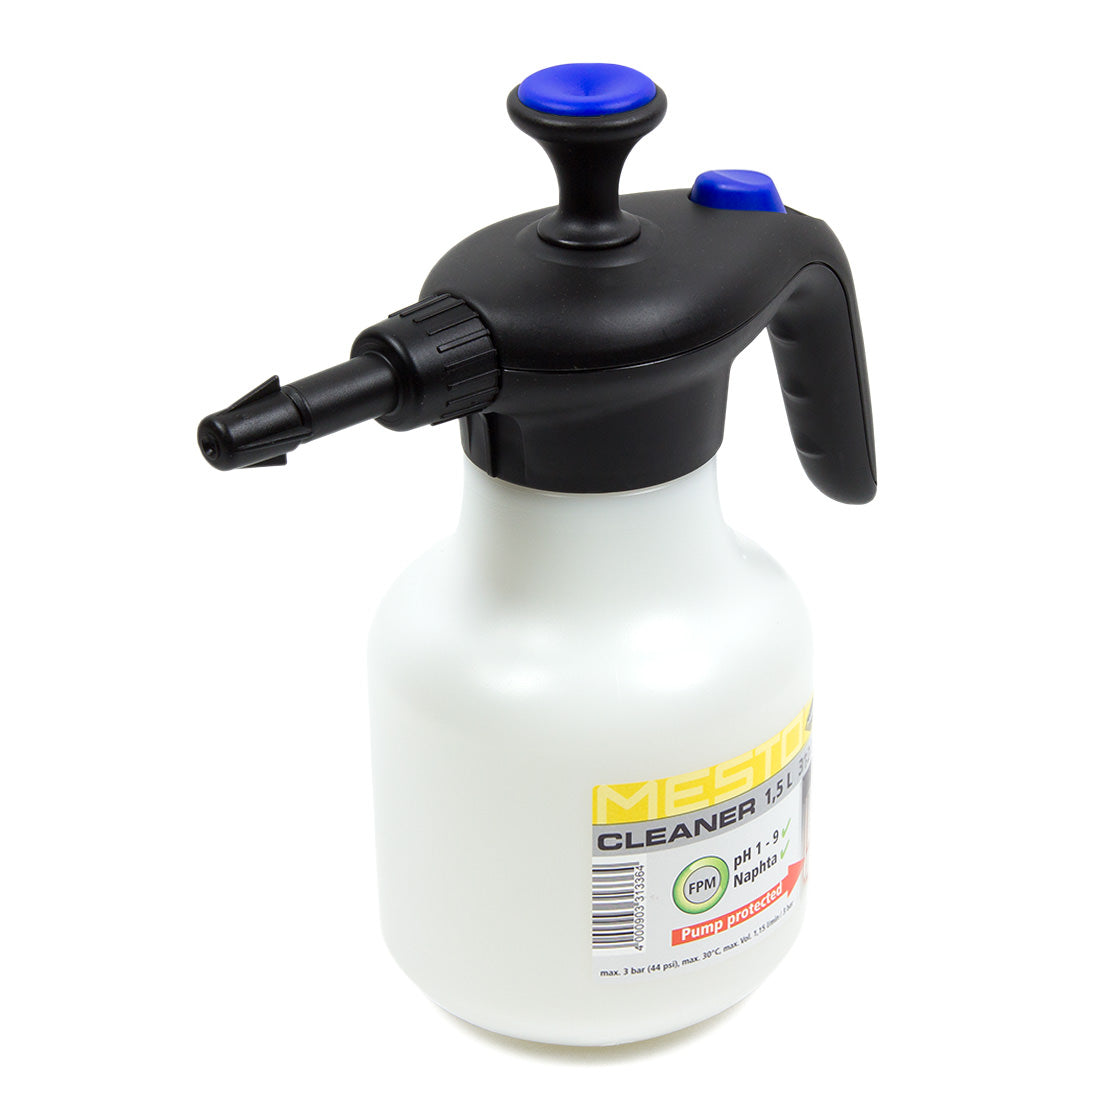 MESTO CLEANER Pressure Sprayer - Chemically Resistant Pump Sprayer